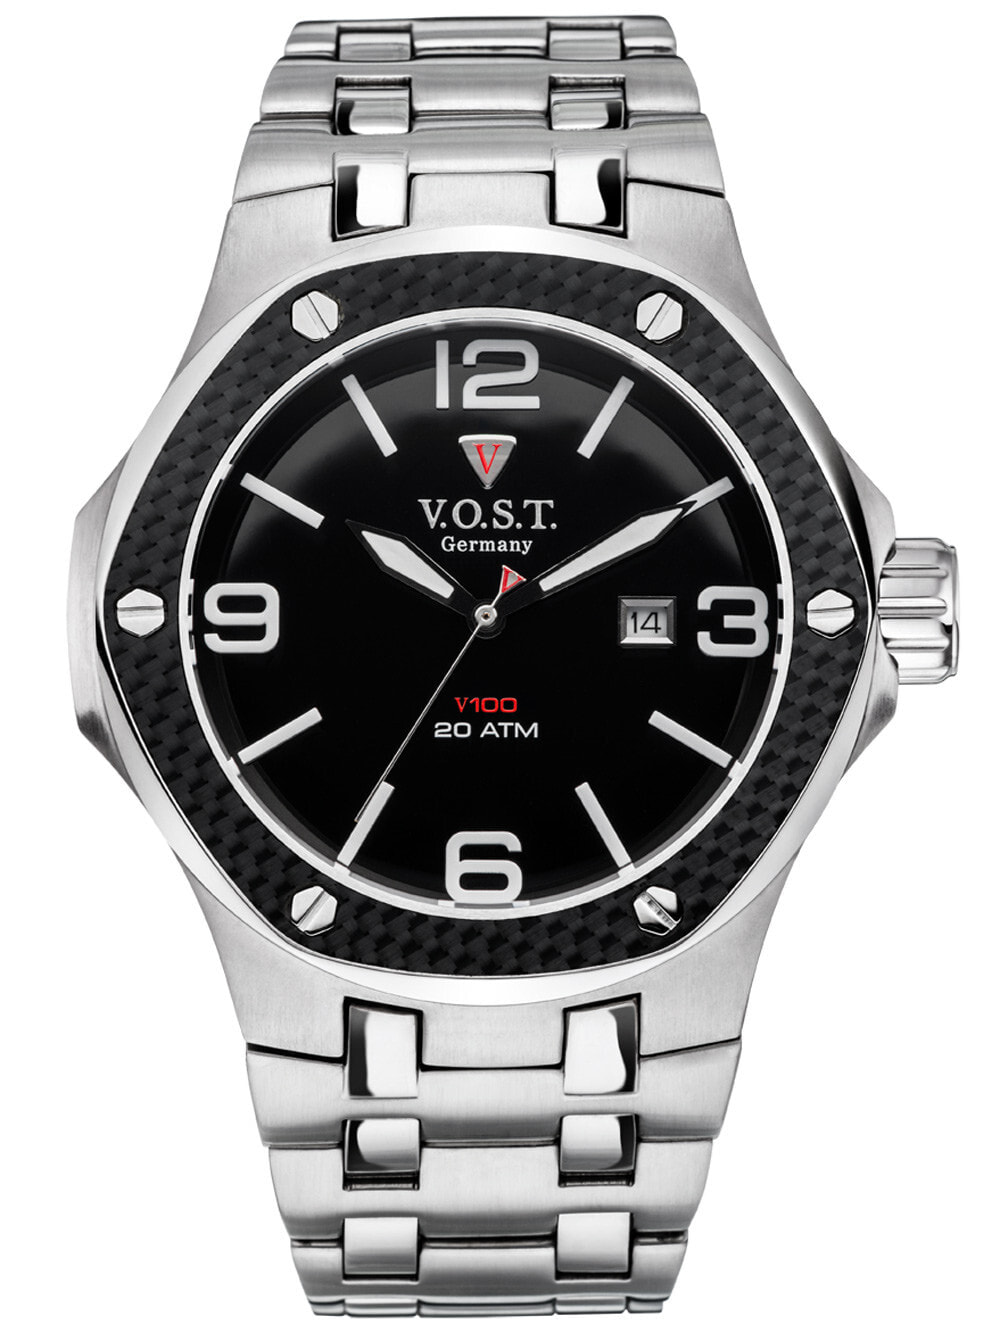 Мужские наручные часы с серебряным браслетом V.O.S.T. Germany V100.009.3S.SC.M.B Steel-Date 44mm 20ATM